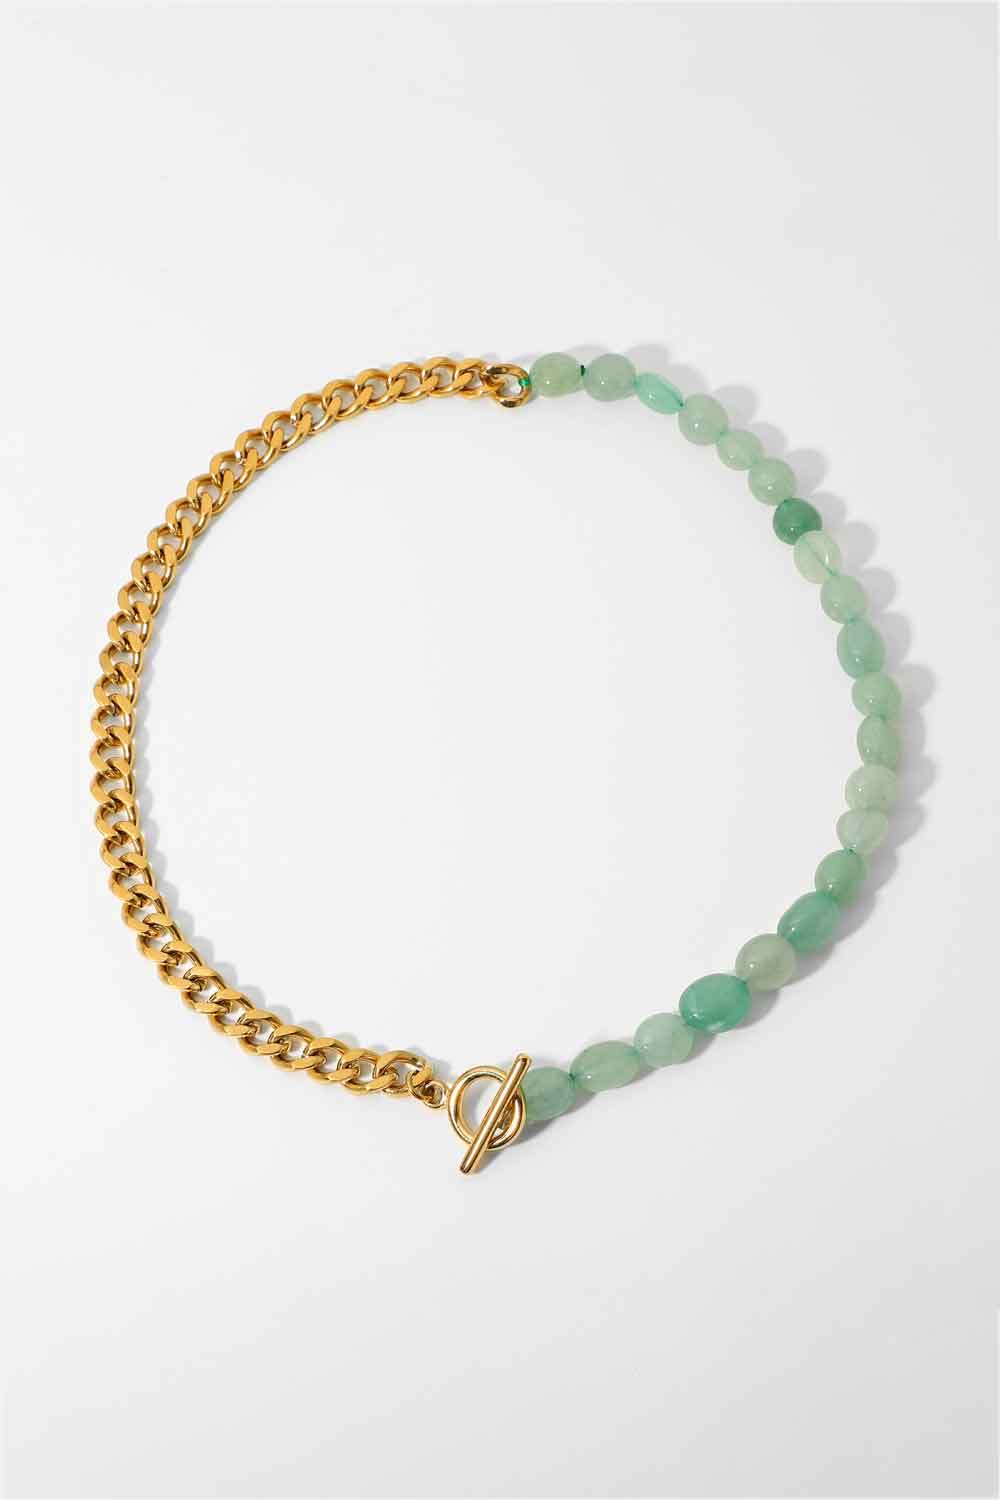 Half Bead Half Chain Necklace | AdoreStarr